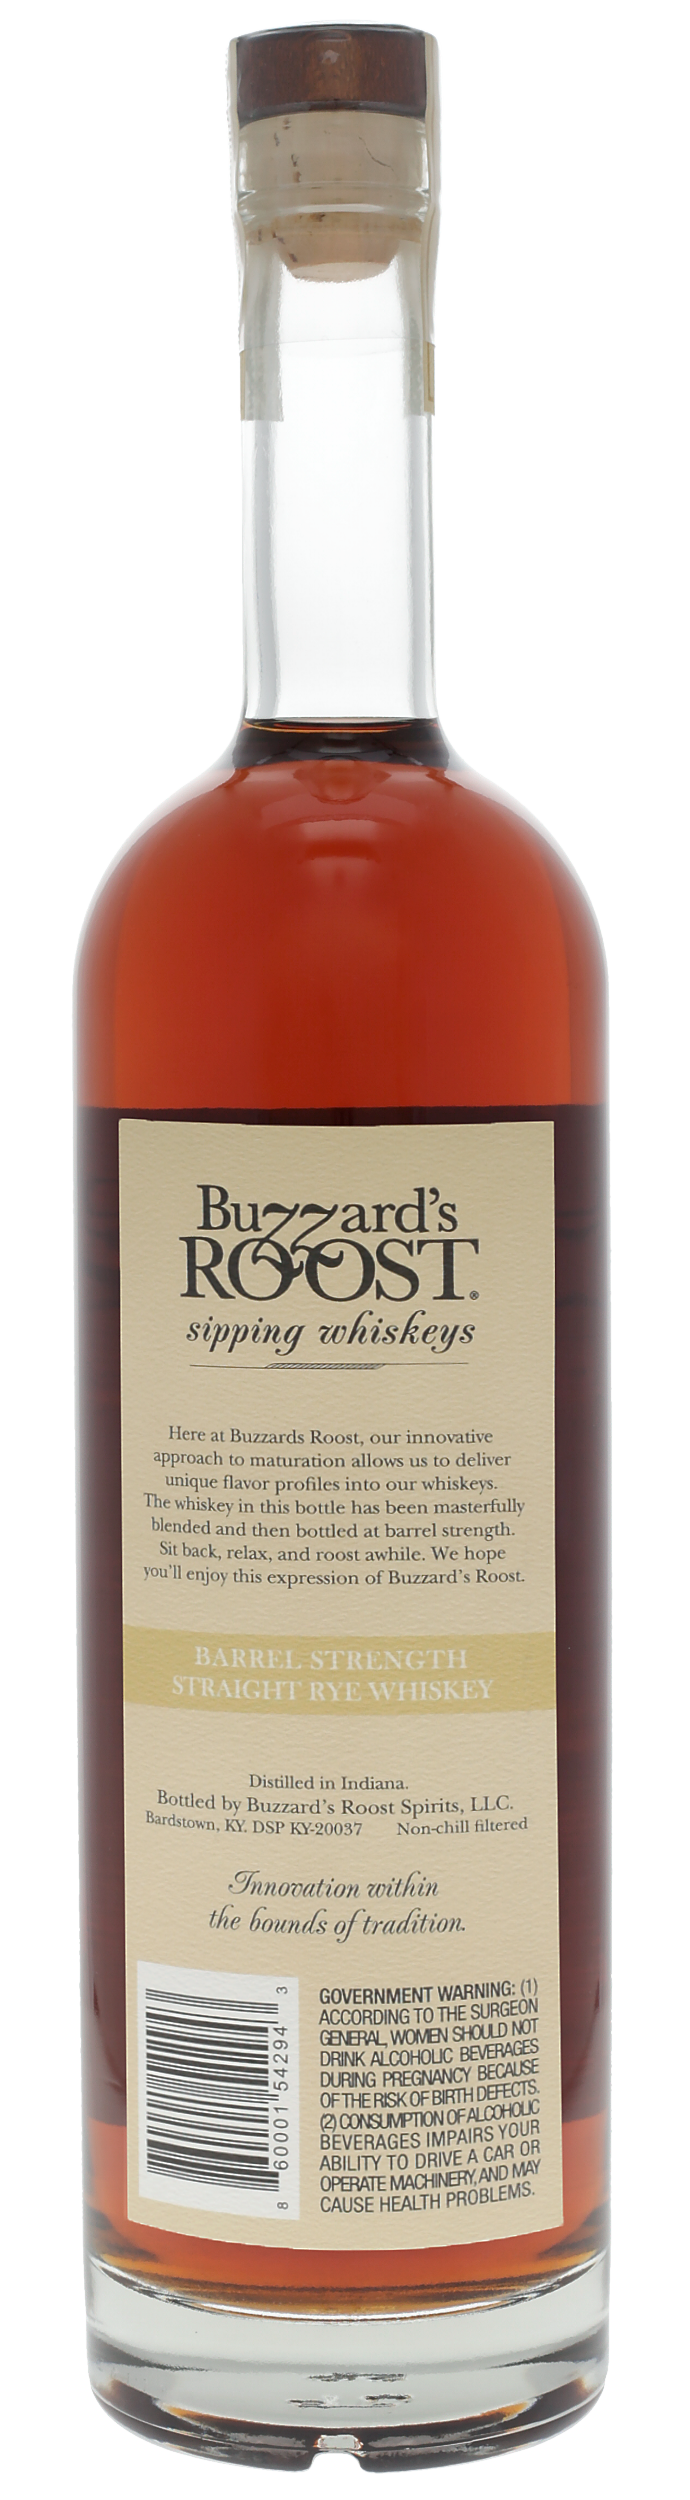 Buzzard's Roost Barrel Strength Rye